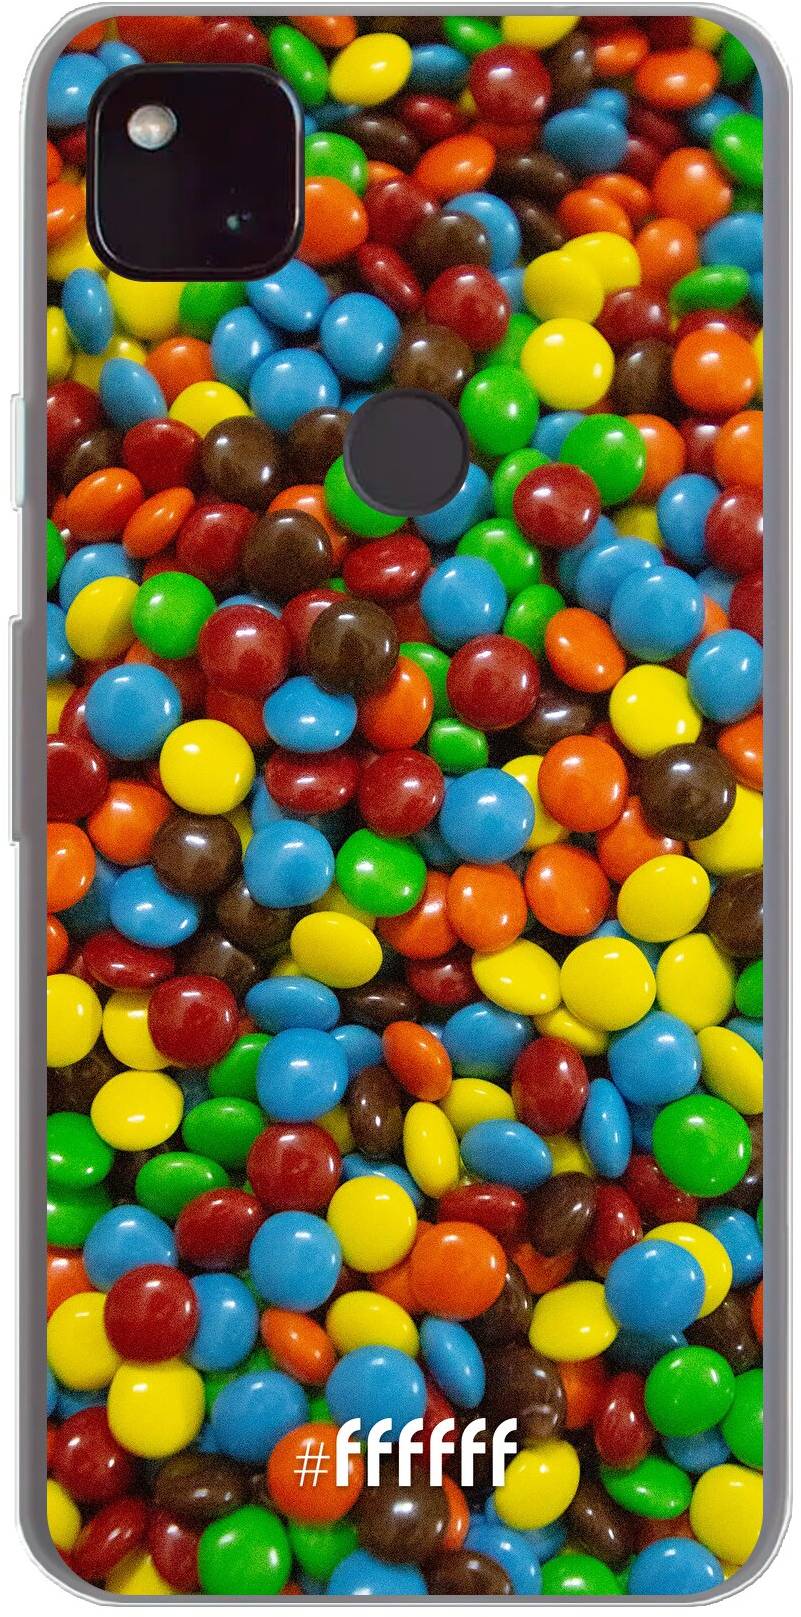 Chocolate Festival Pixel 4a 5G